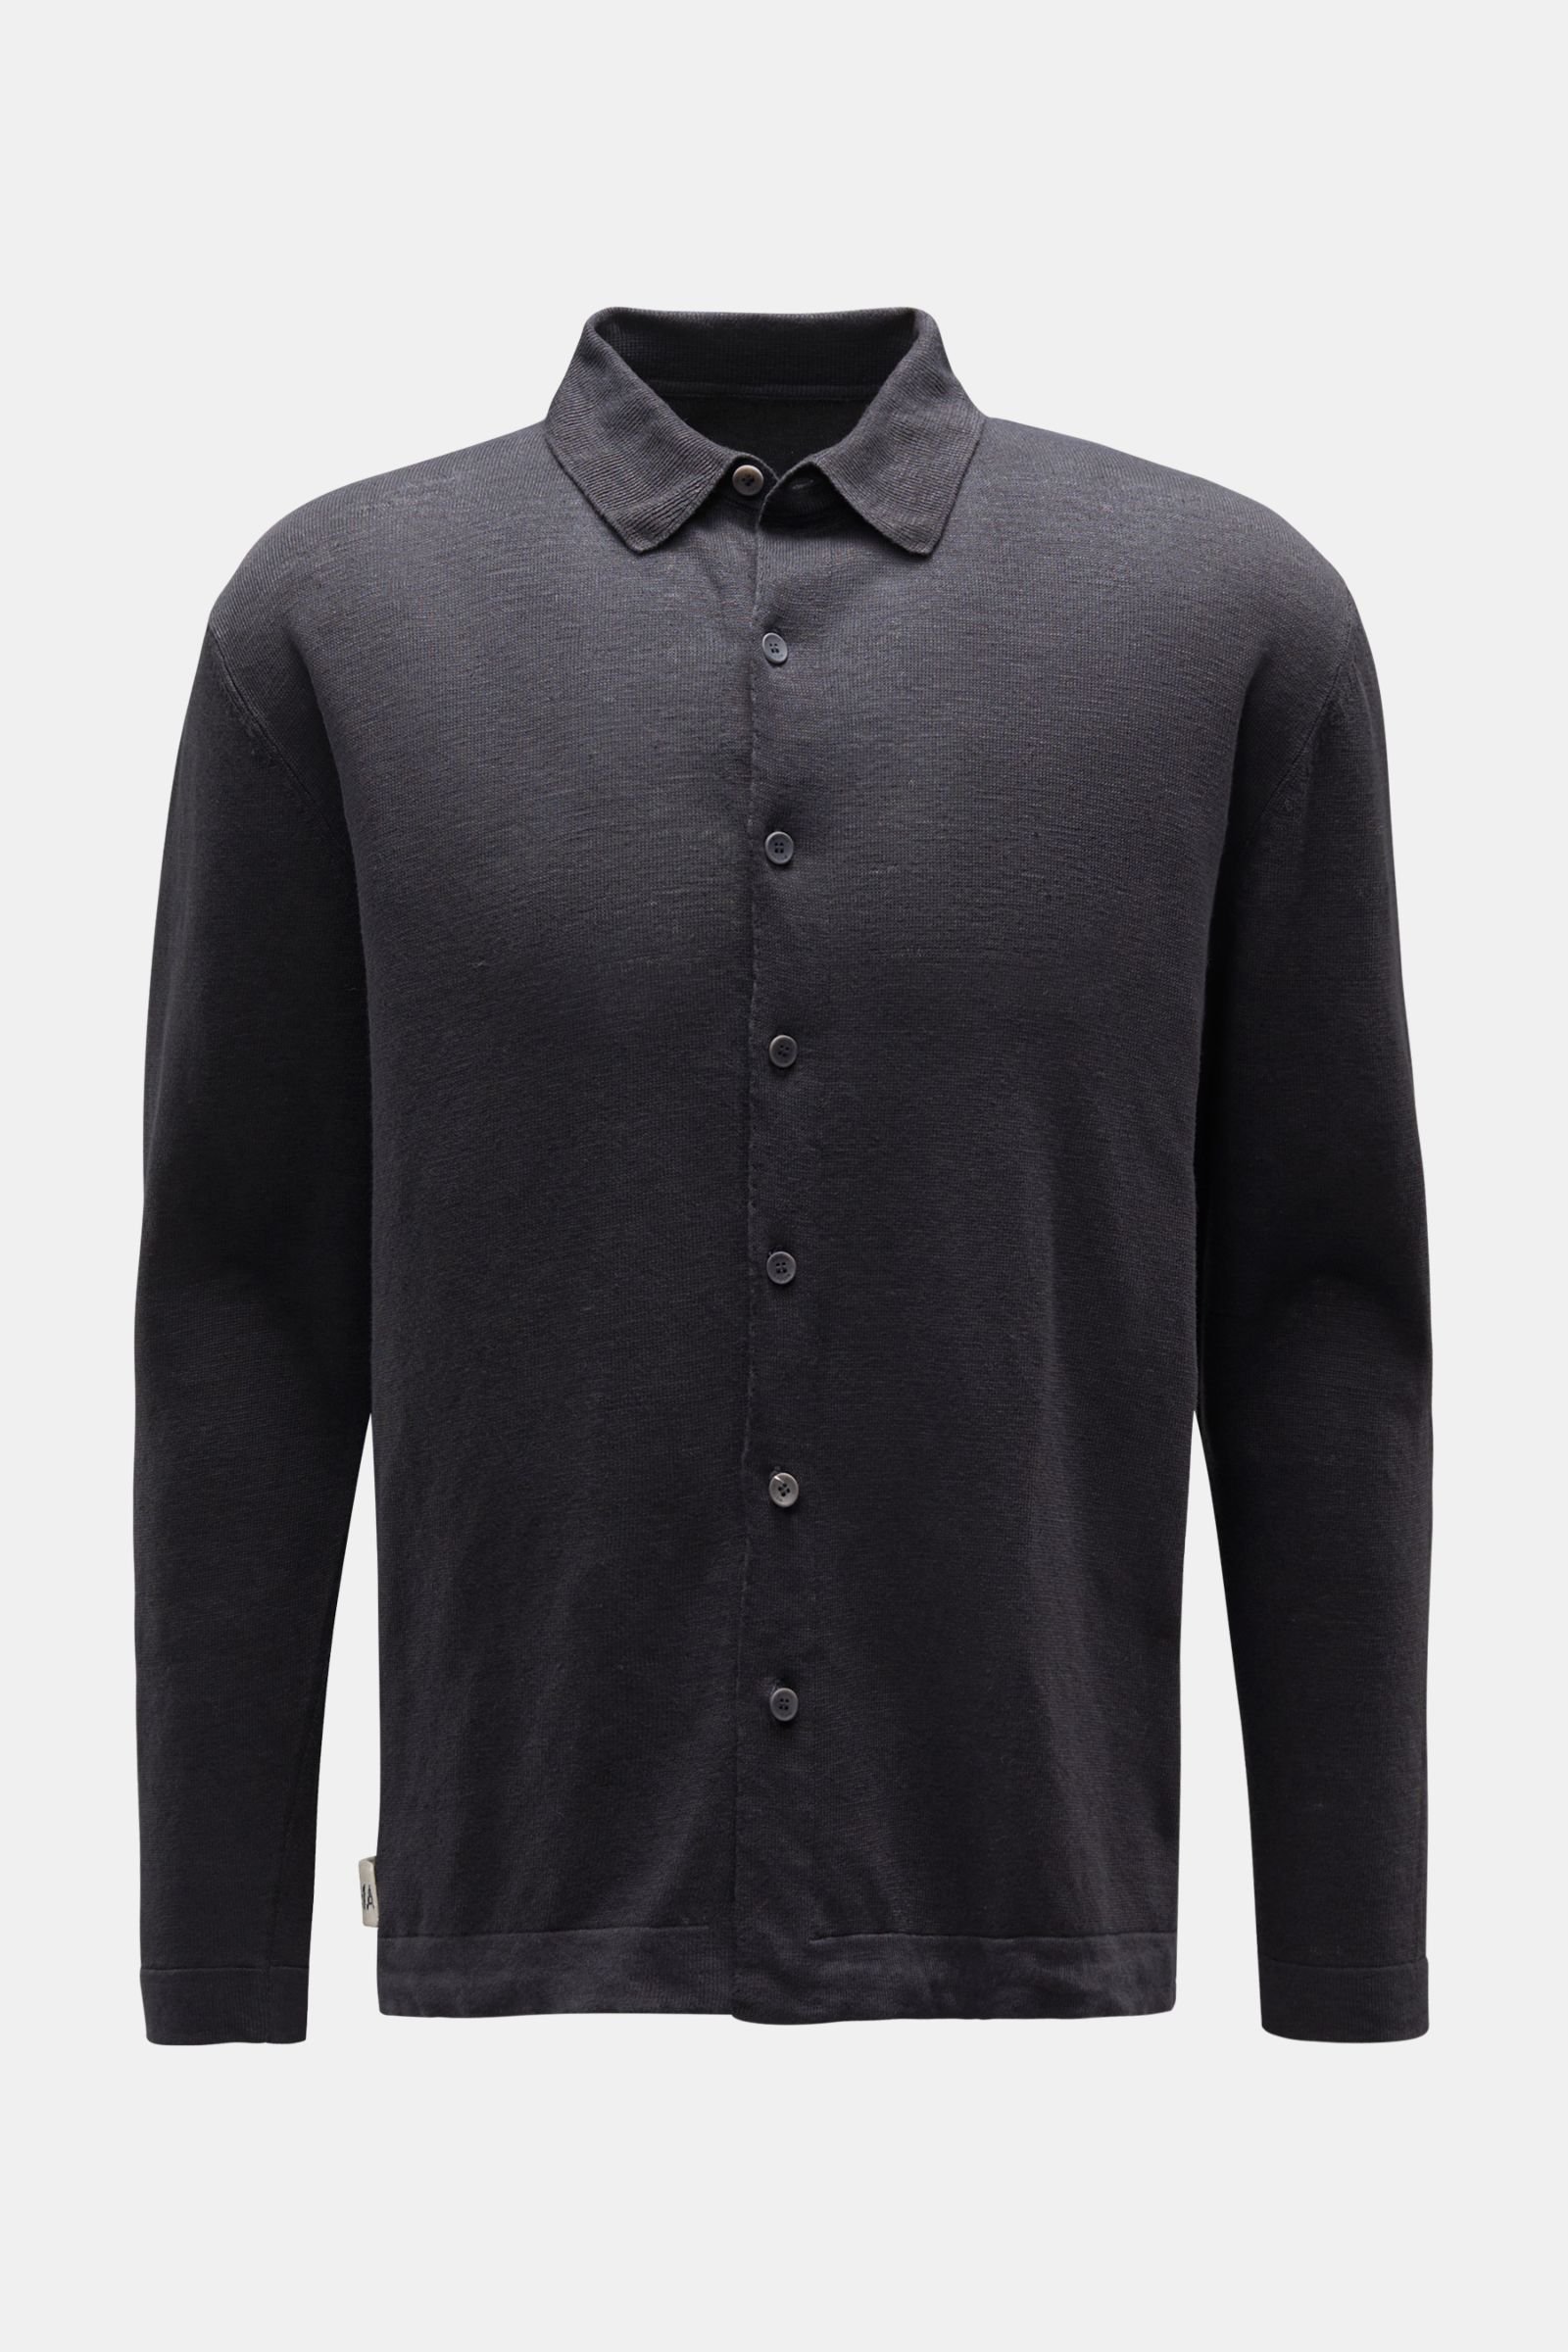 Linen knit shirt narrow collar dark grey